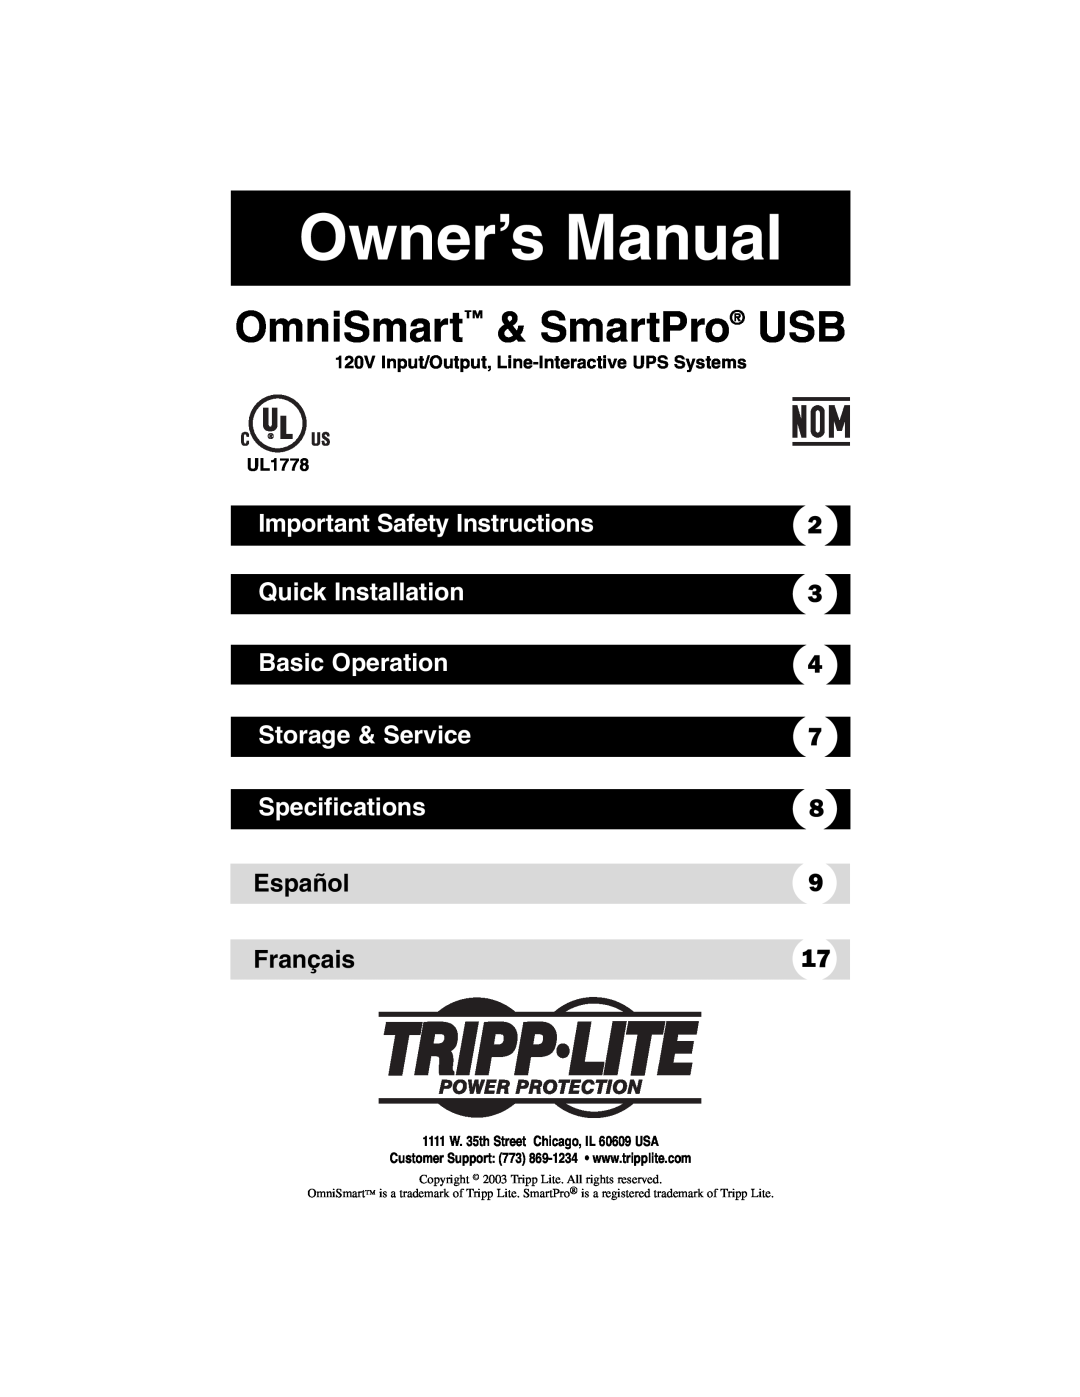 Tripp Lite OmniSmart & SmartPro USB owner manual Important Safety Instructions, Quick Installation, Basic Operation 